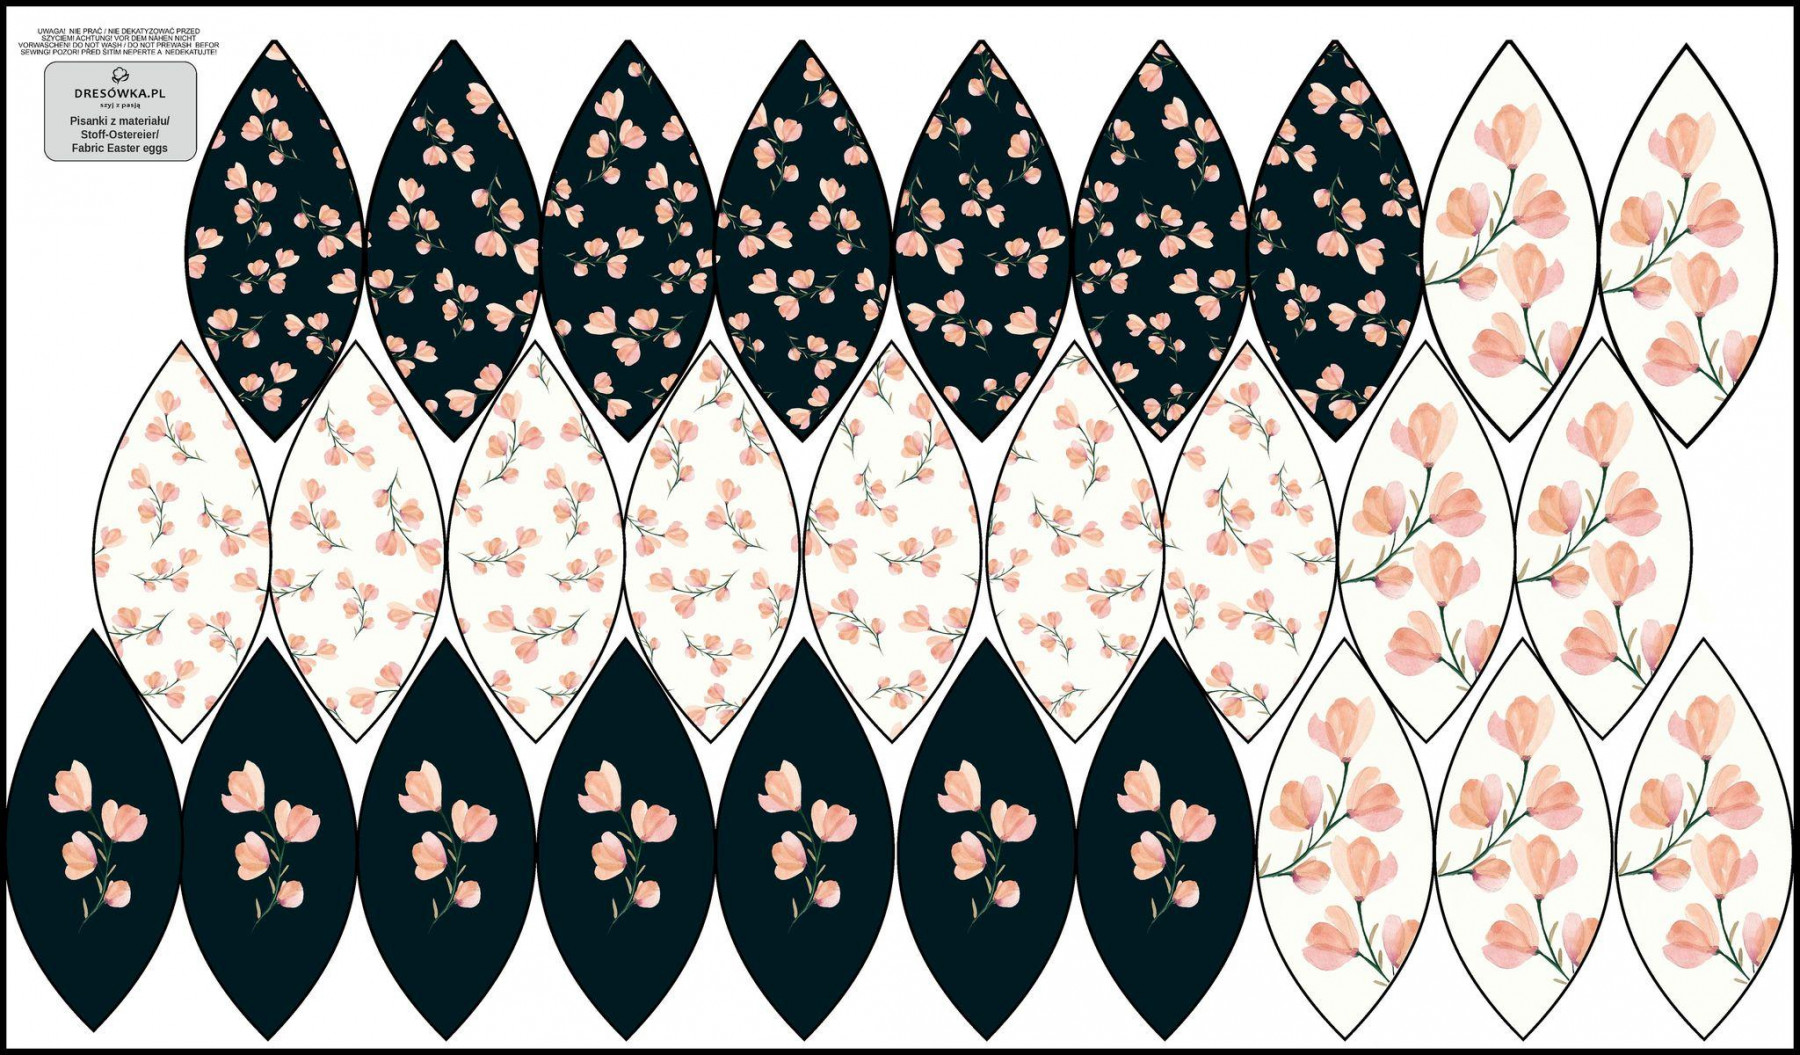 7 EASTER EGGS SEWING SET - PINK FLOWERS PAT. 4